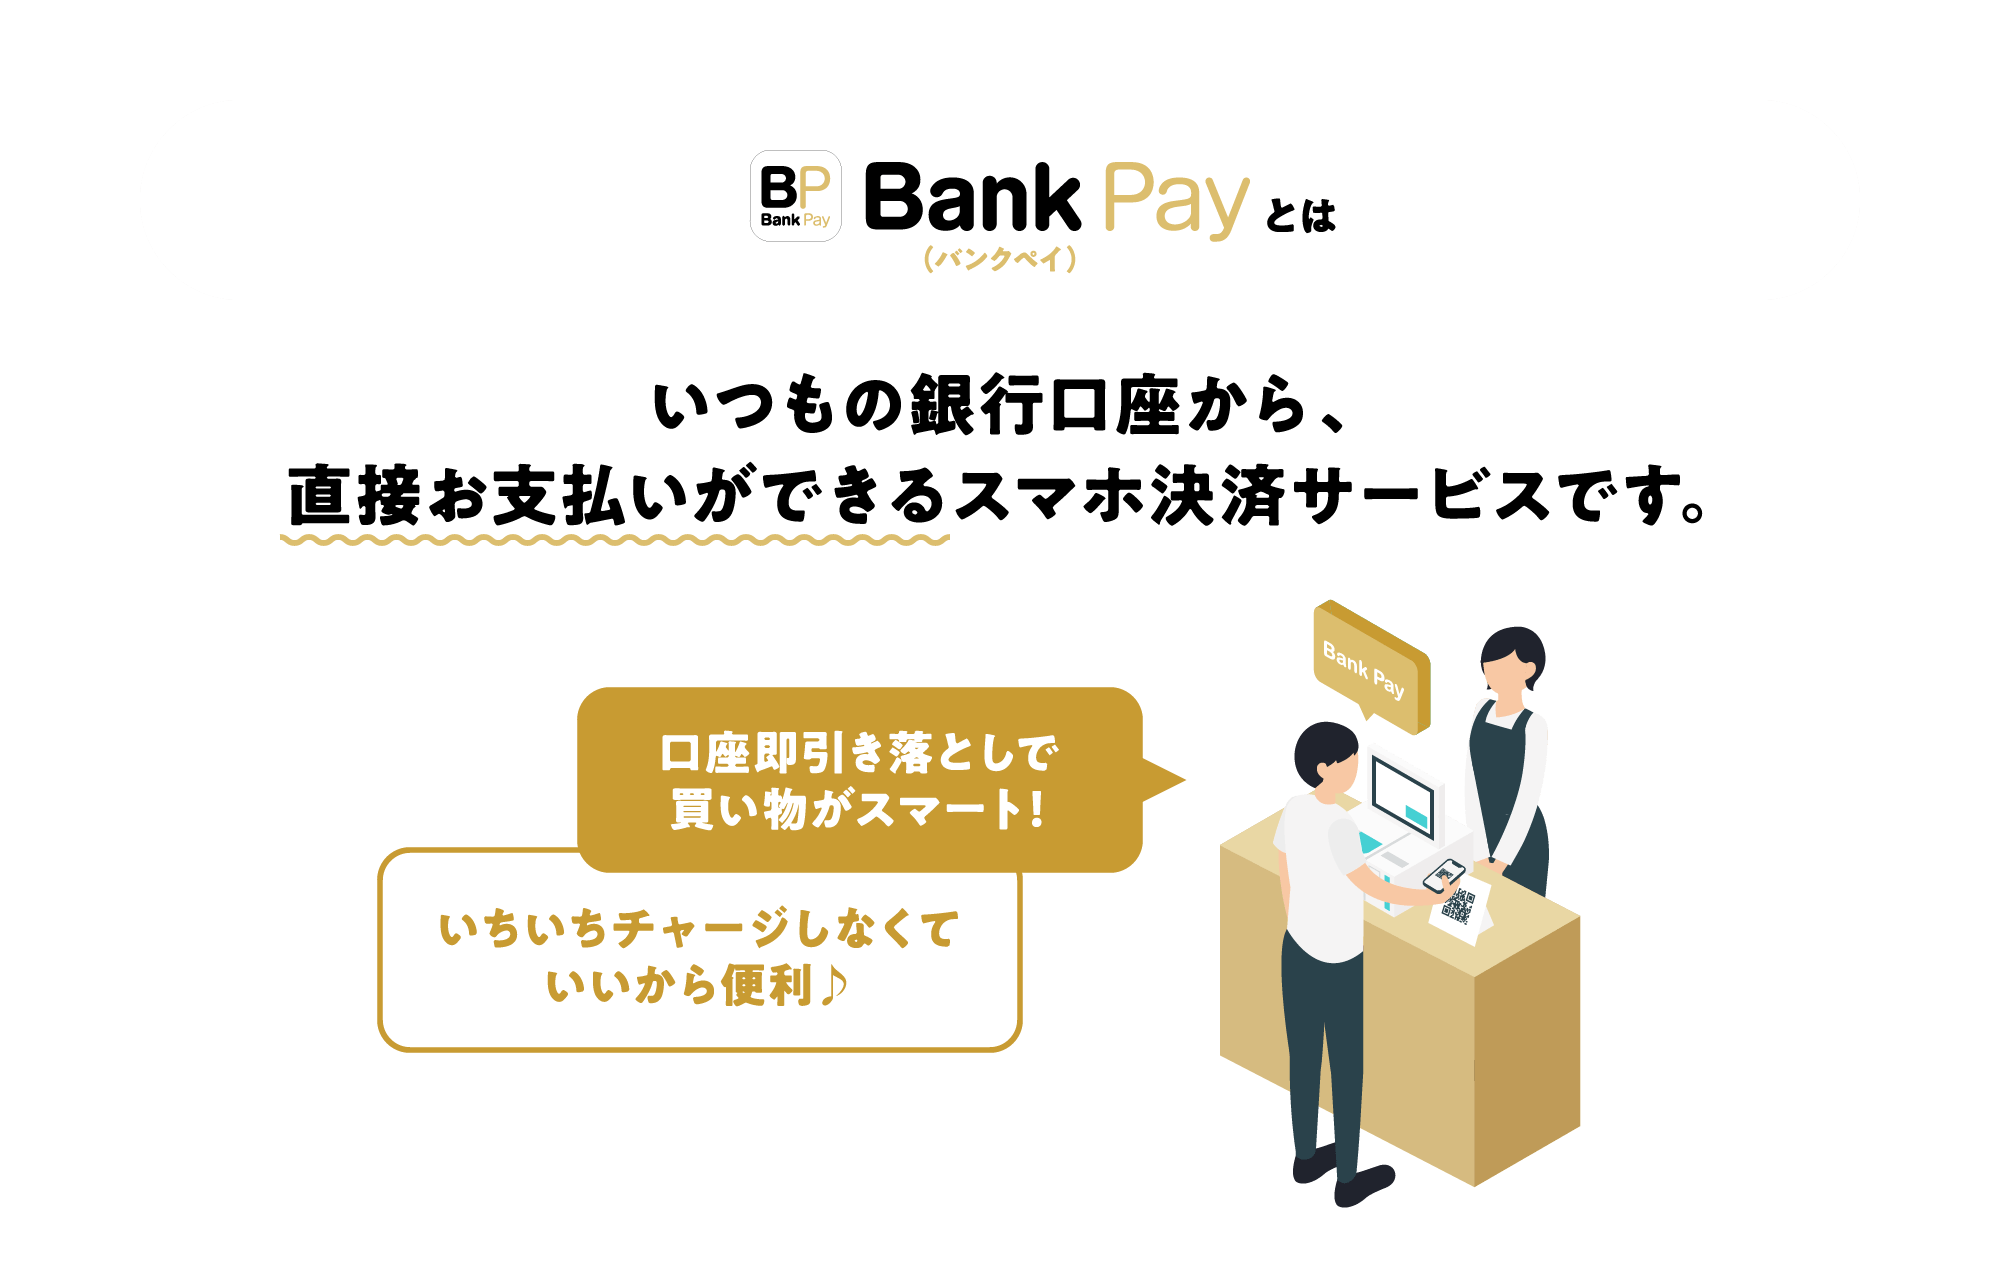 Bank Pay（バンクペイ）とは　いつもの銀行口座から、直接お支払いができるスマホ決済サービスです。